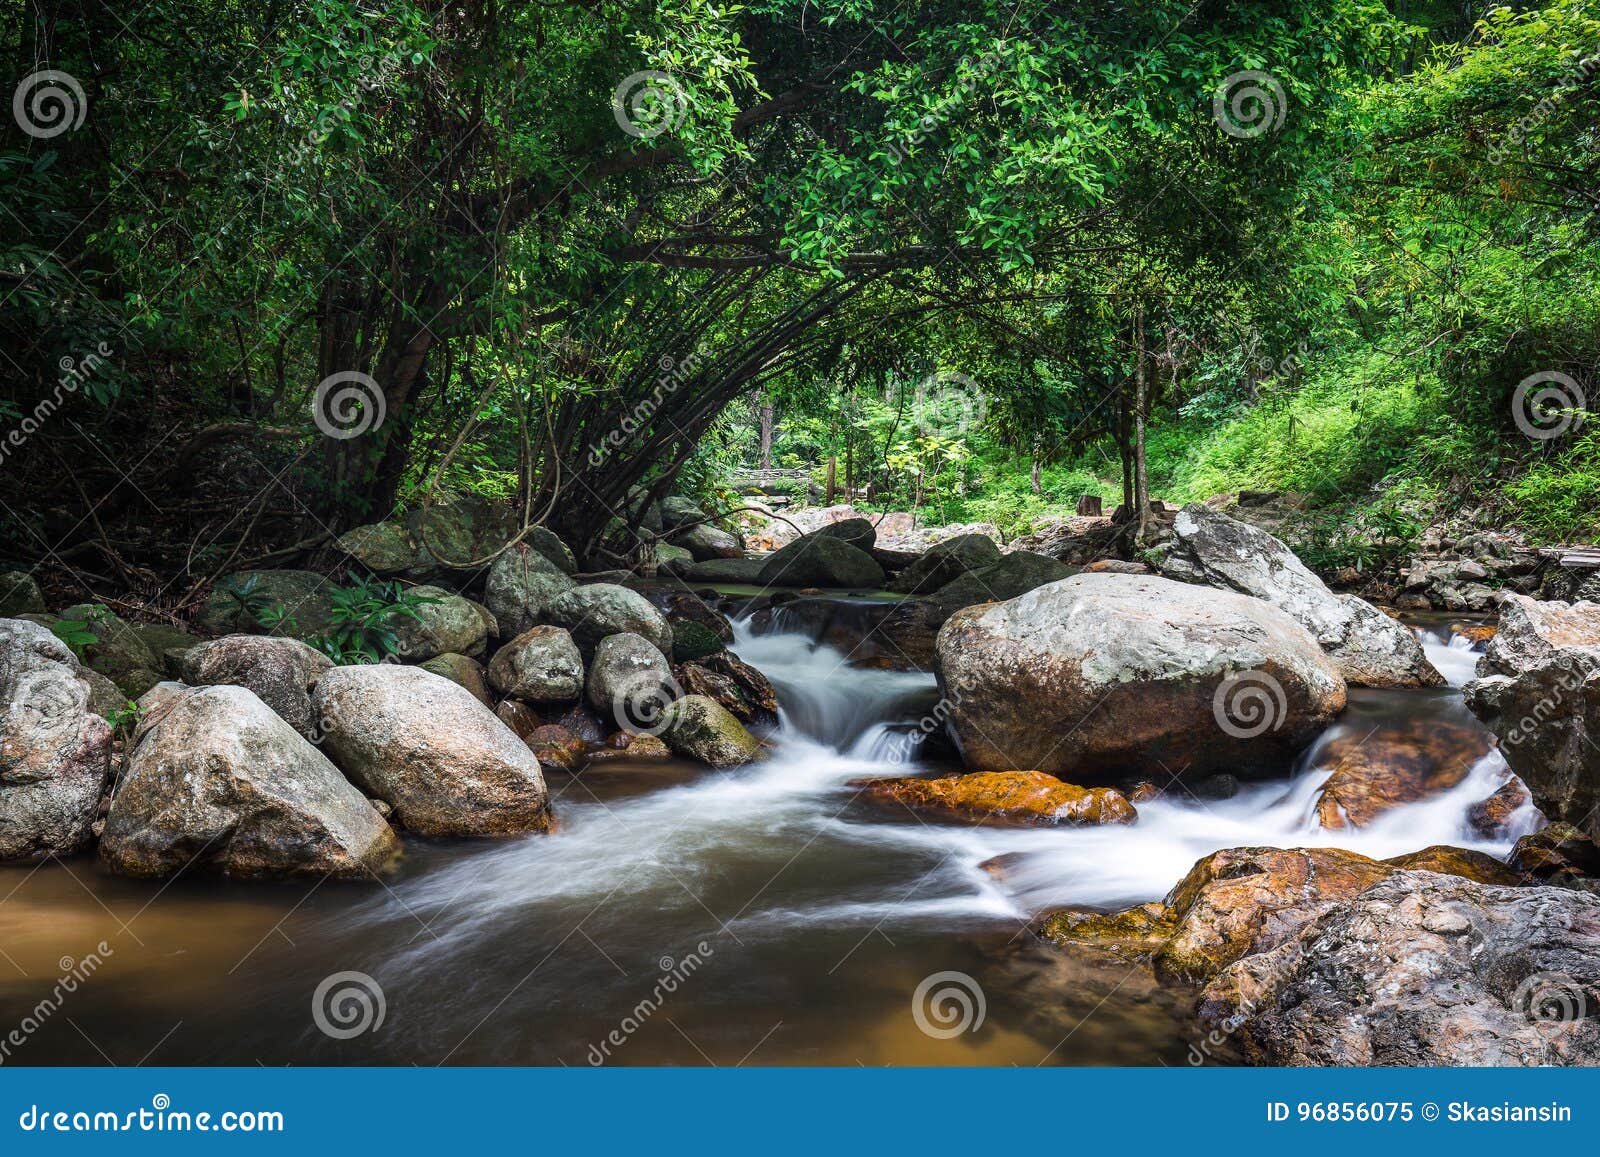 watercourse of rocks in tropical woods